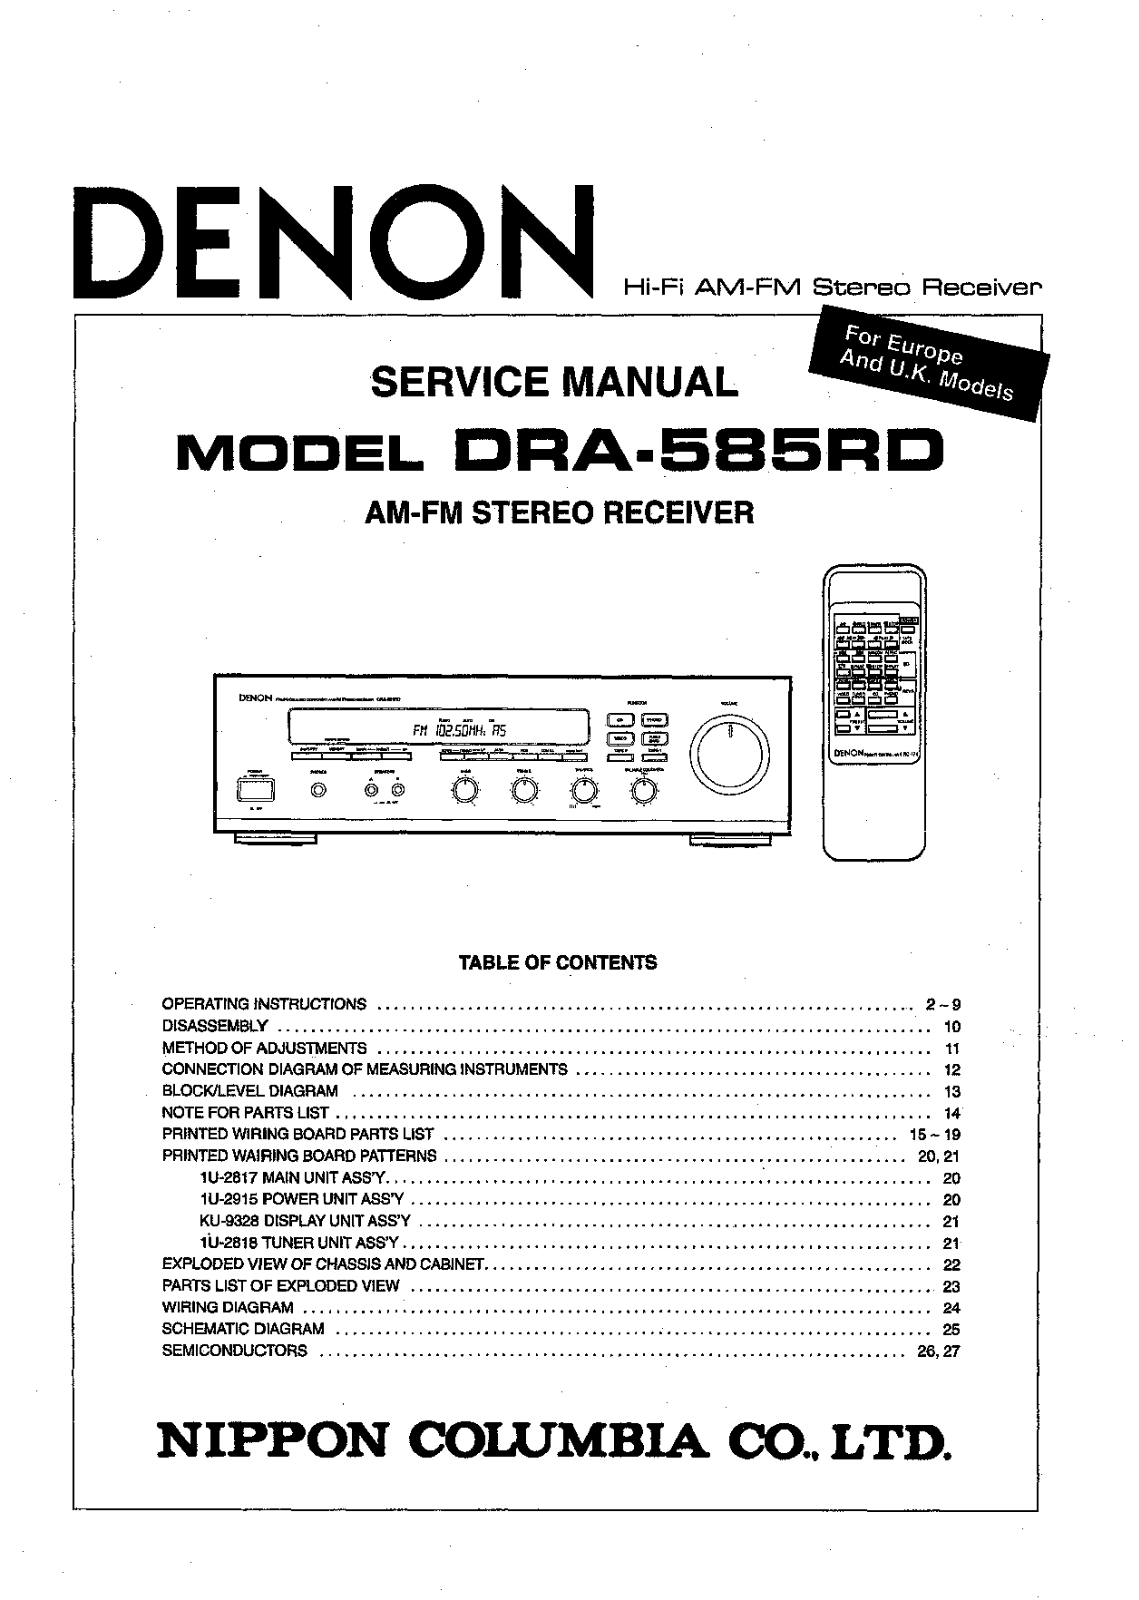 Denon DRA-585RD Service Manual